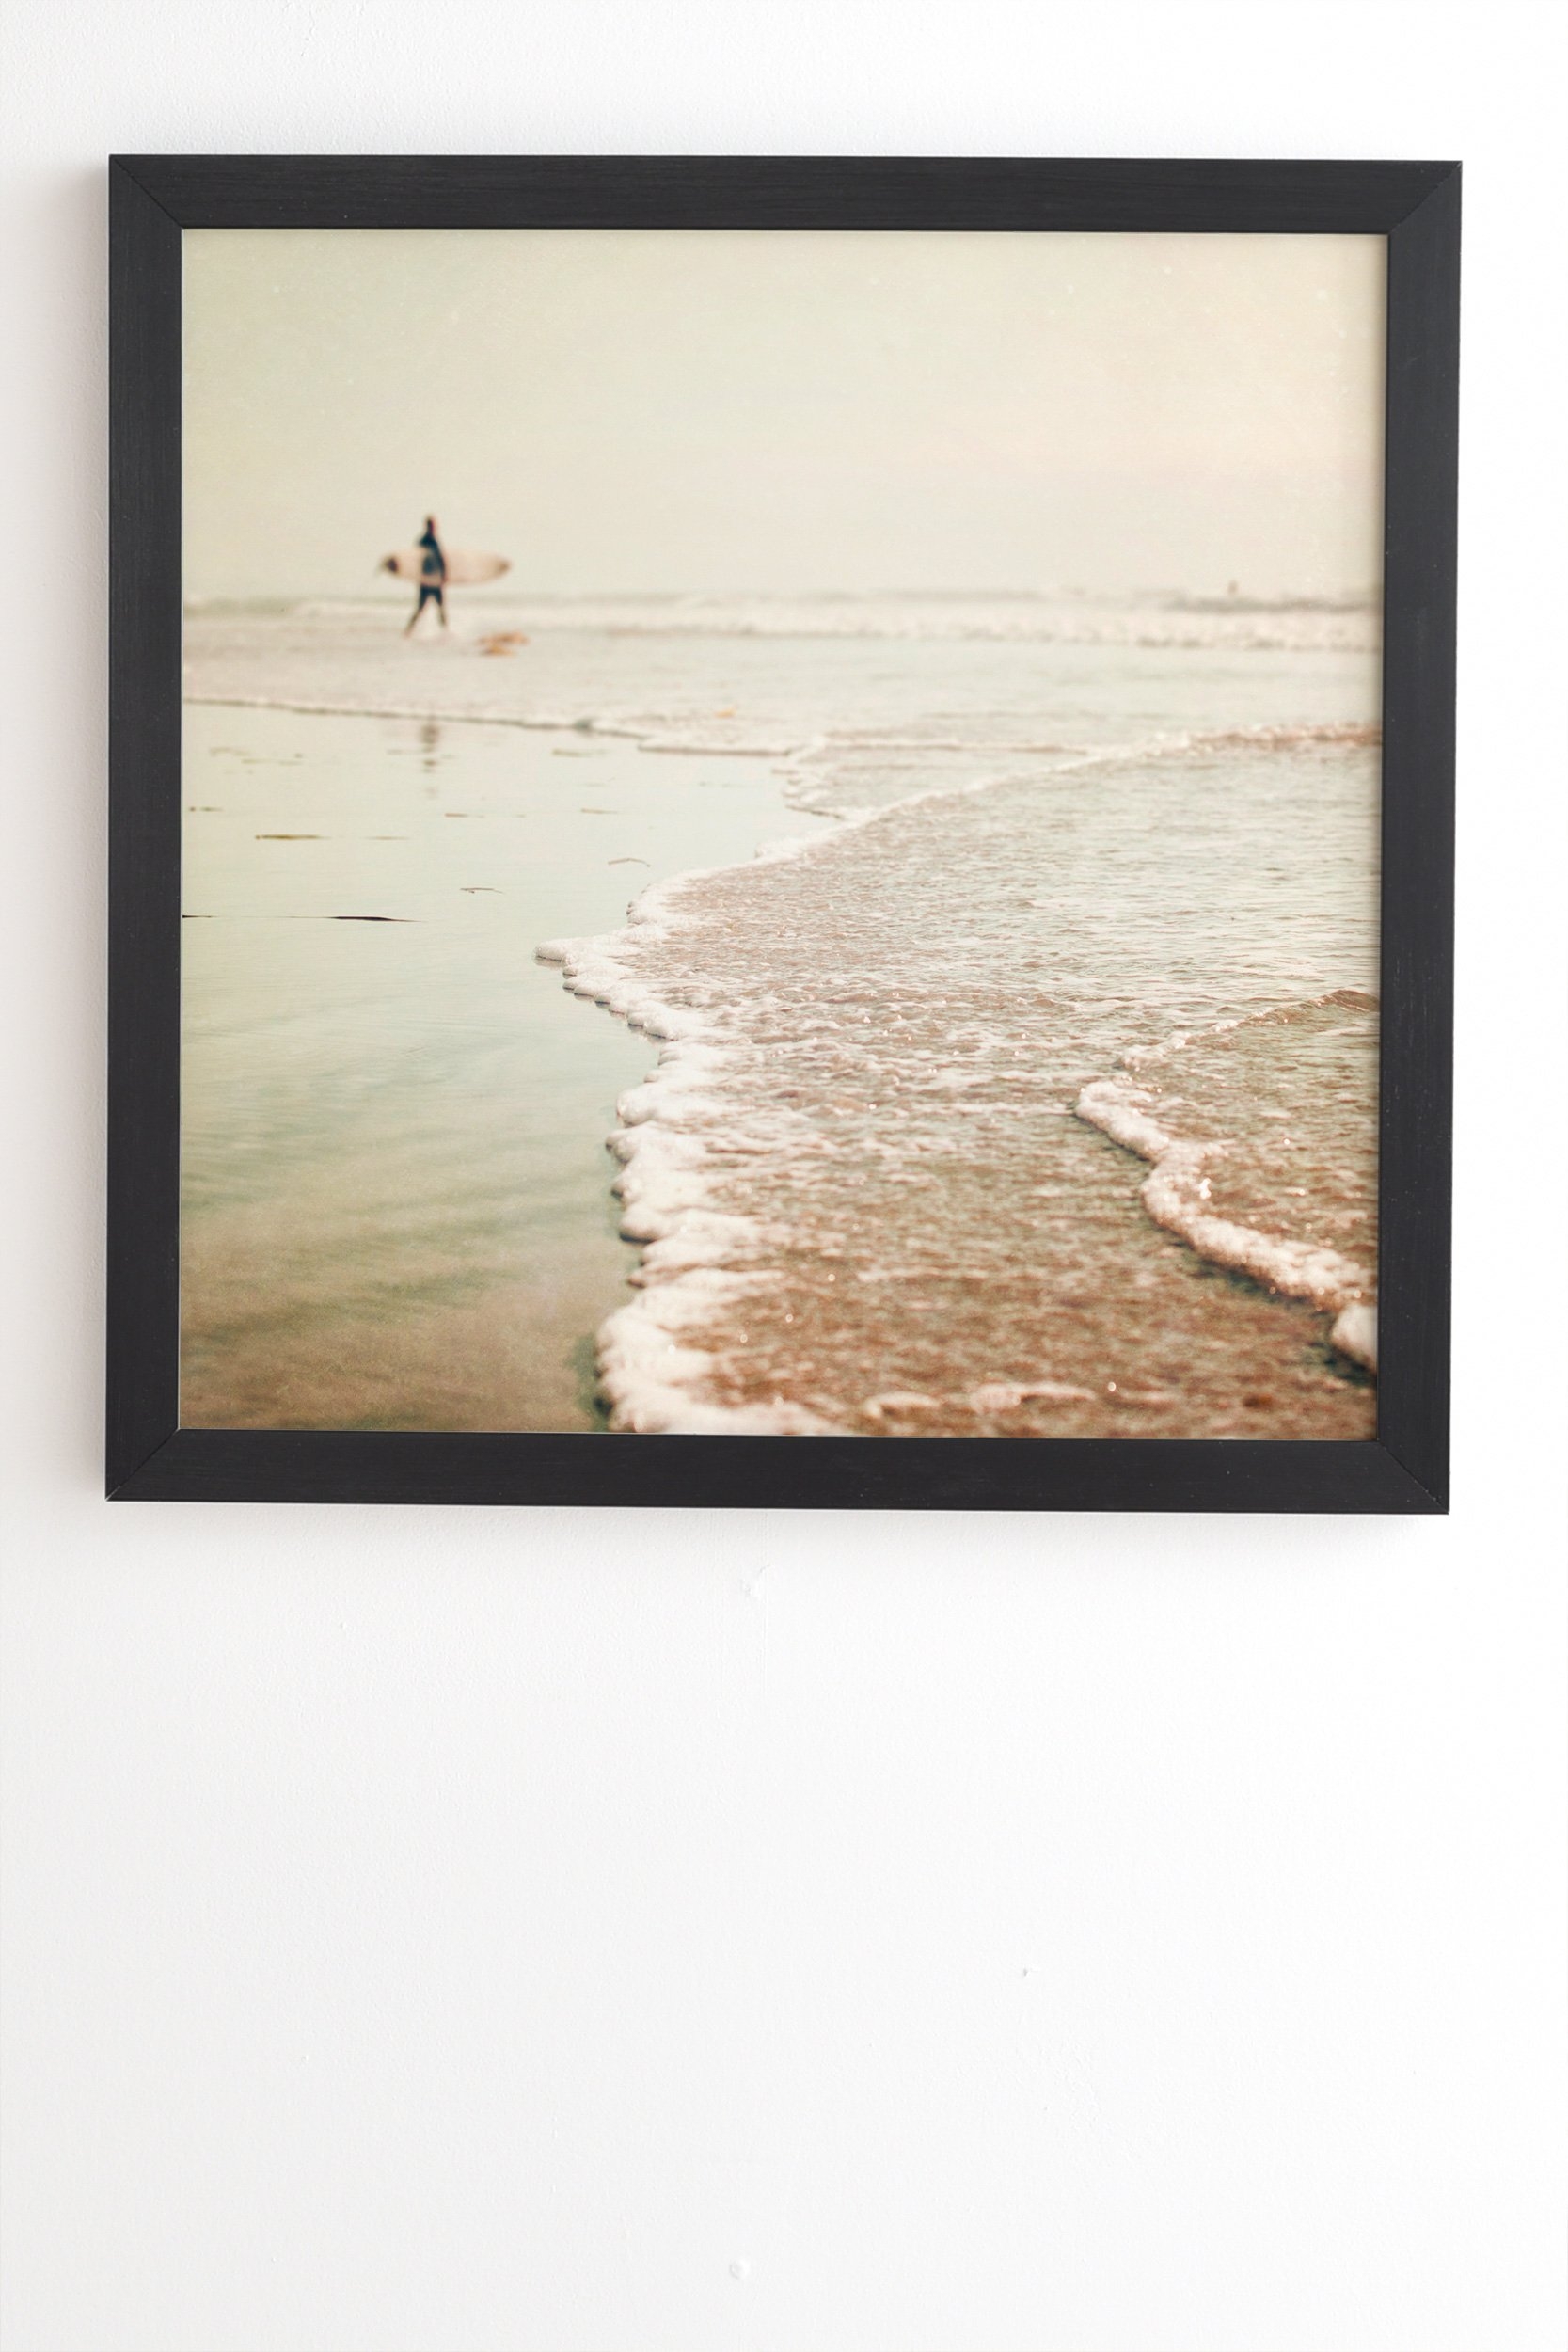 Bree Madden Soul Surfer Black Framed Wall Art - 20" x 20" - Image 1